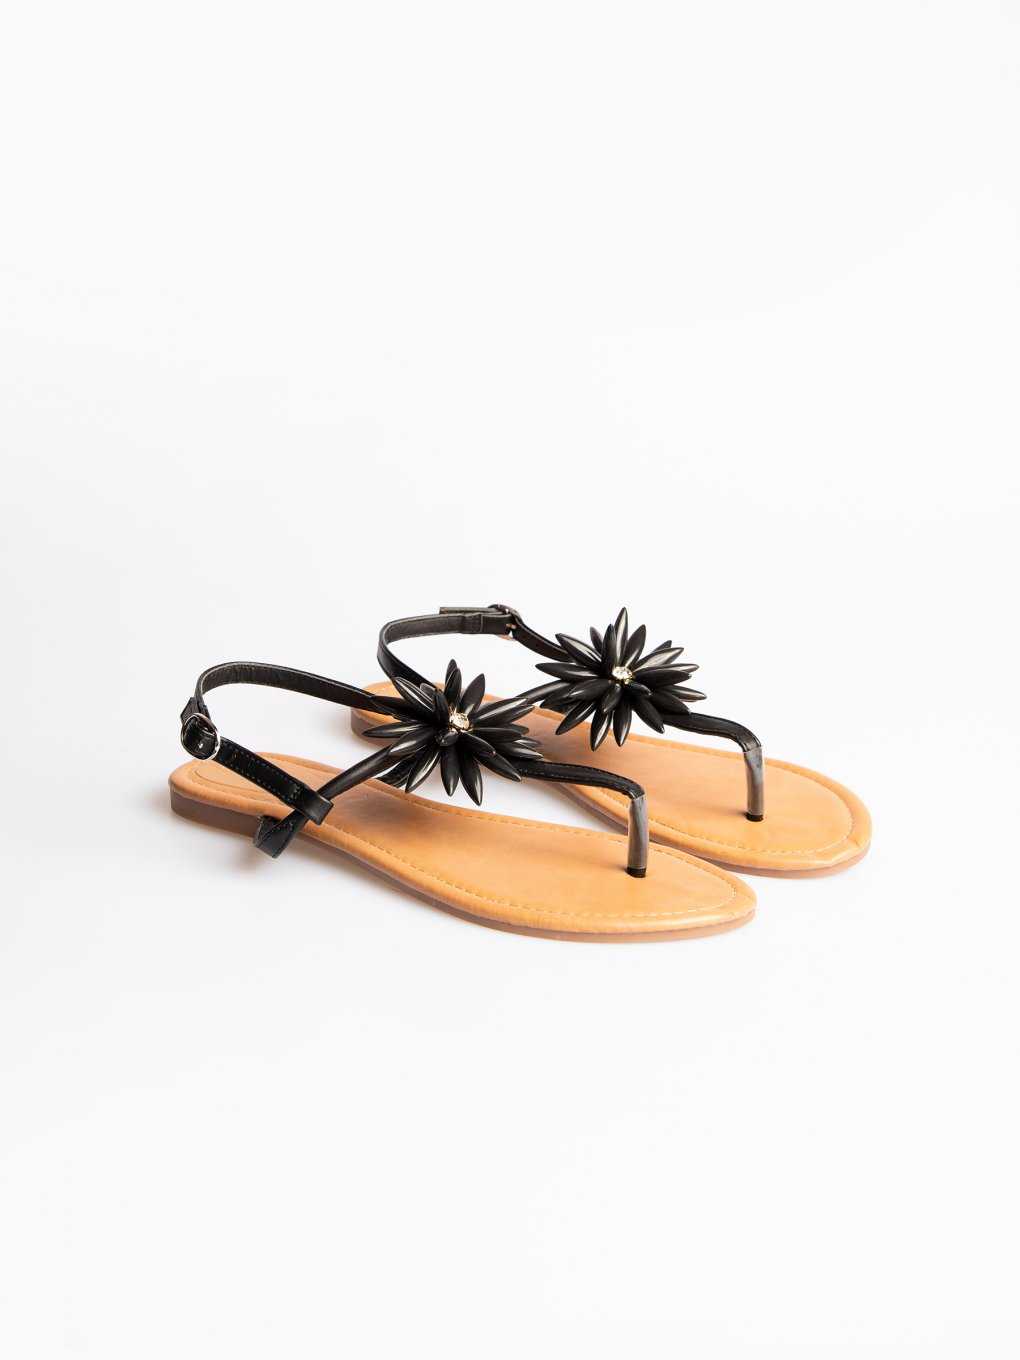 Stone-embellished sandals